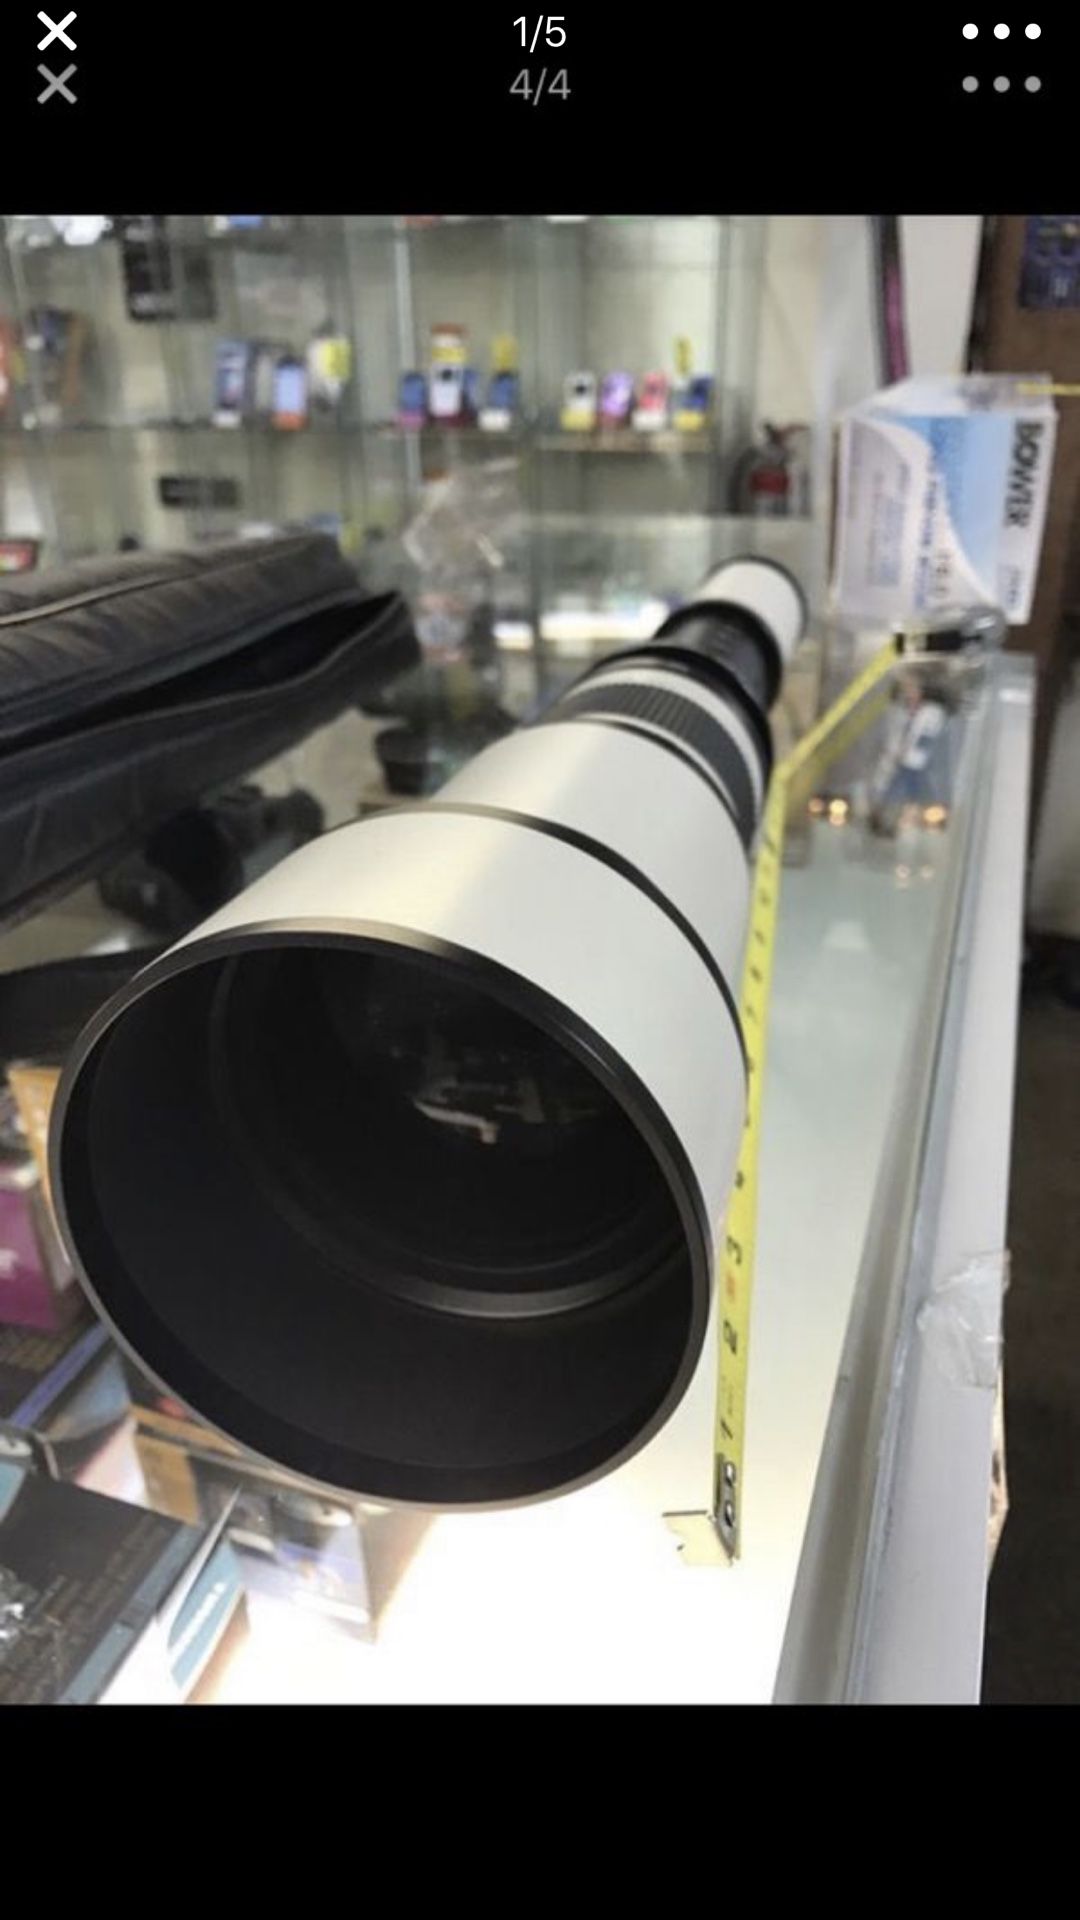 Telescopic 600 mm lens